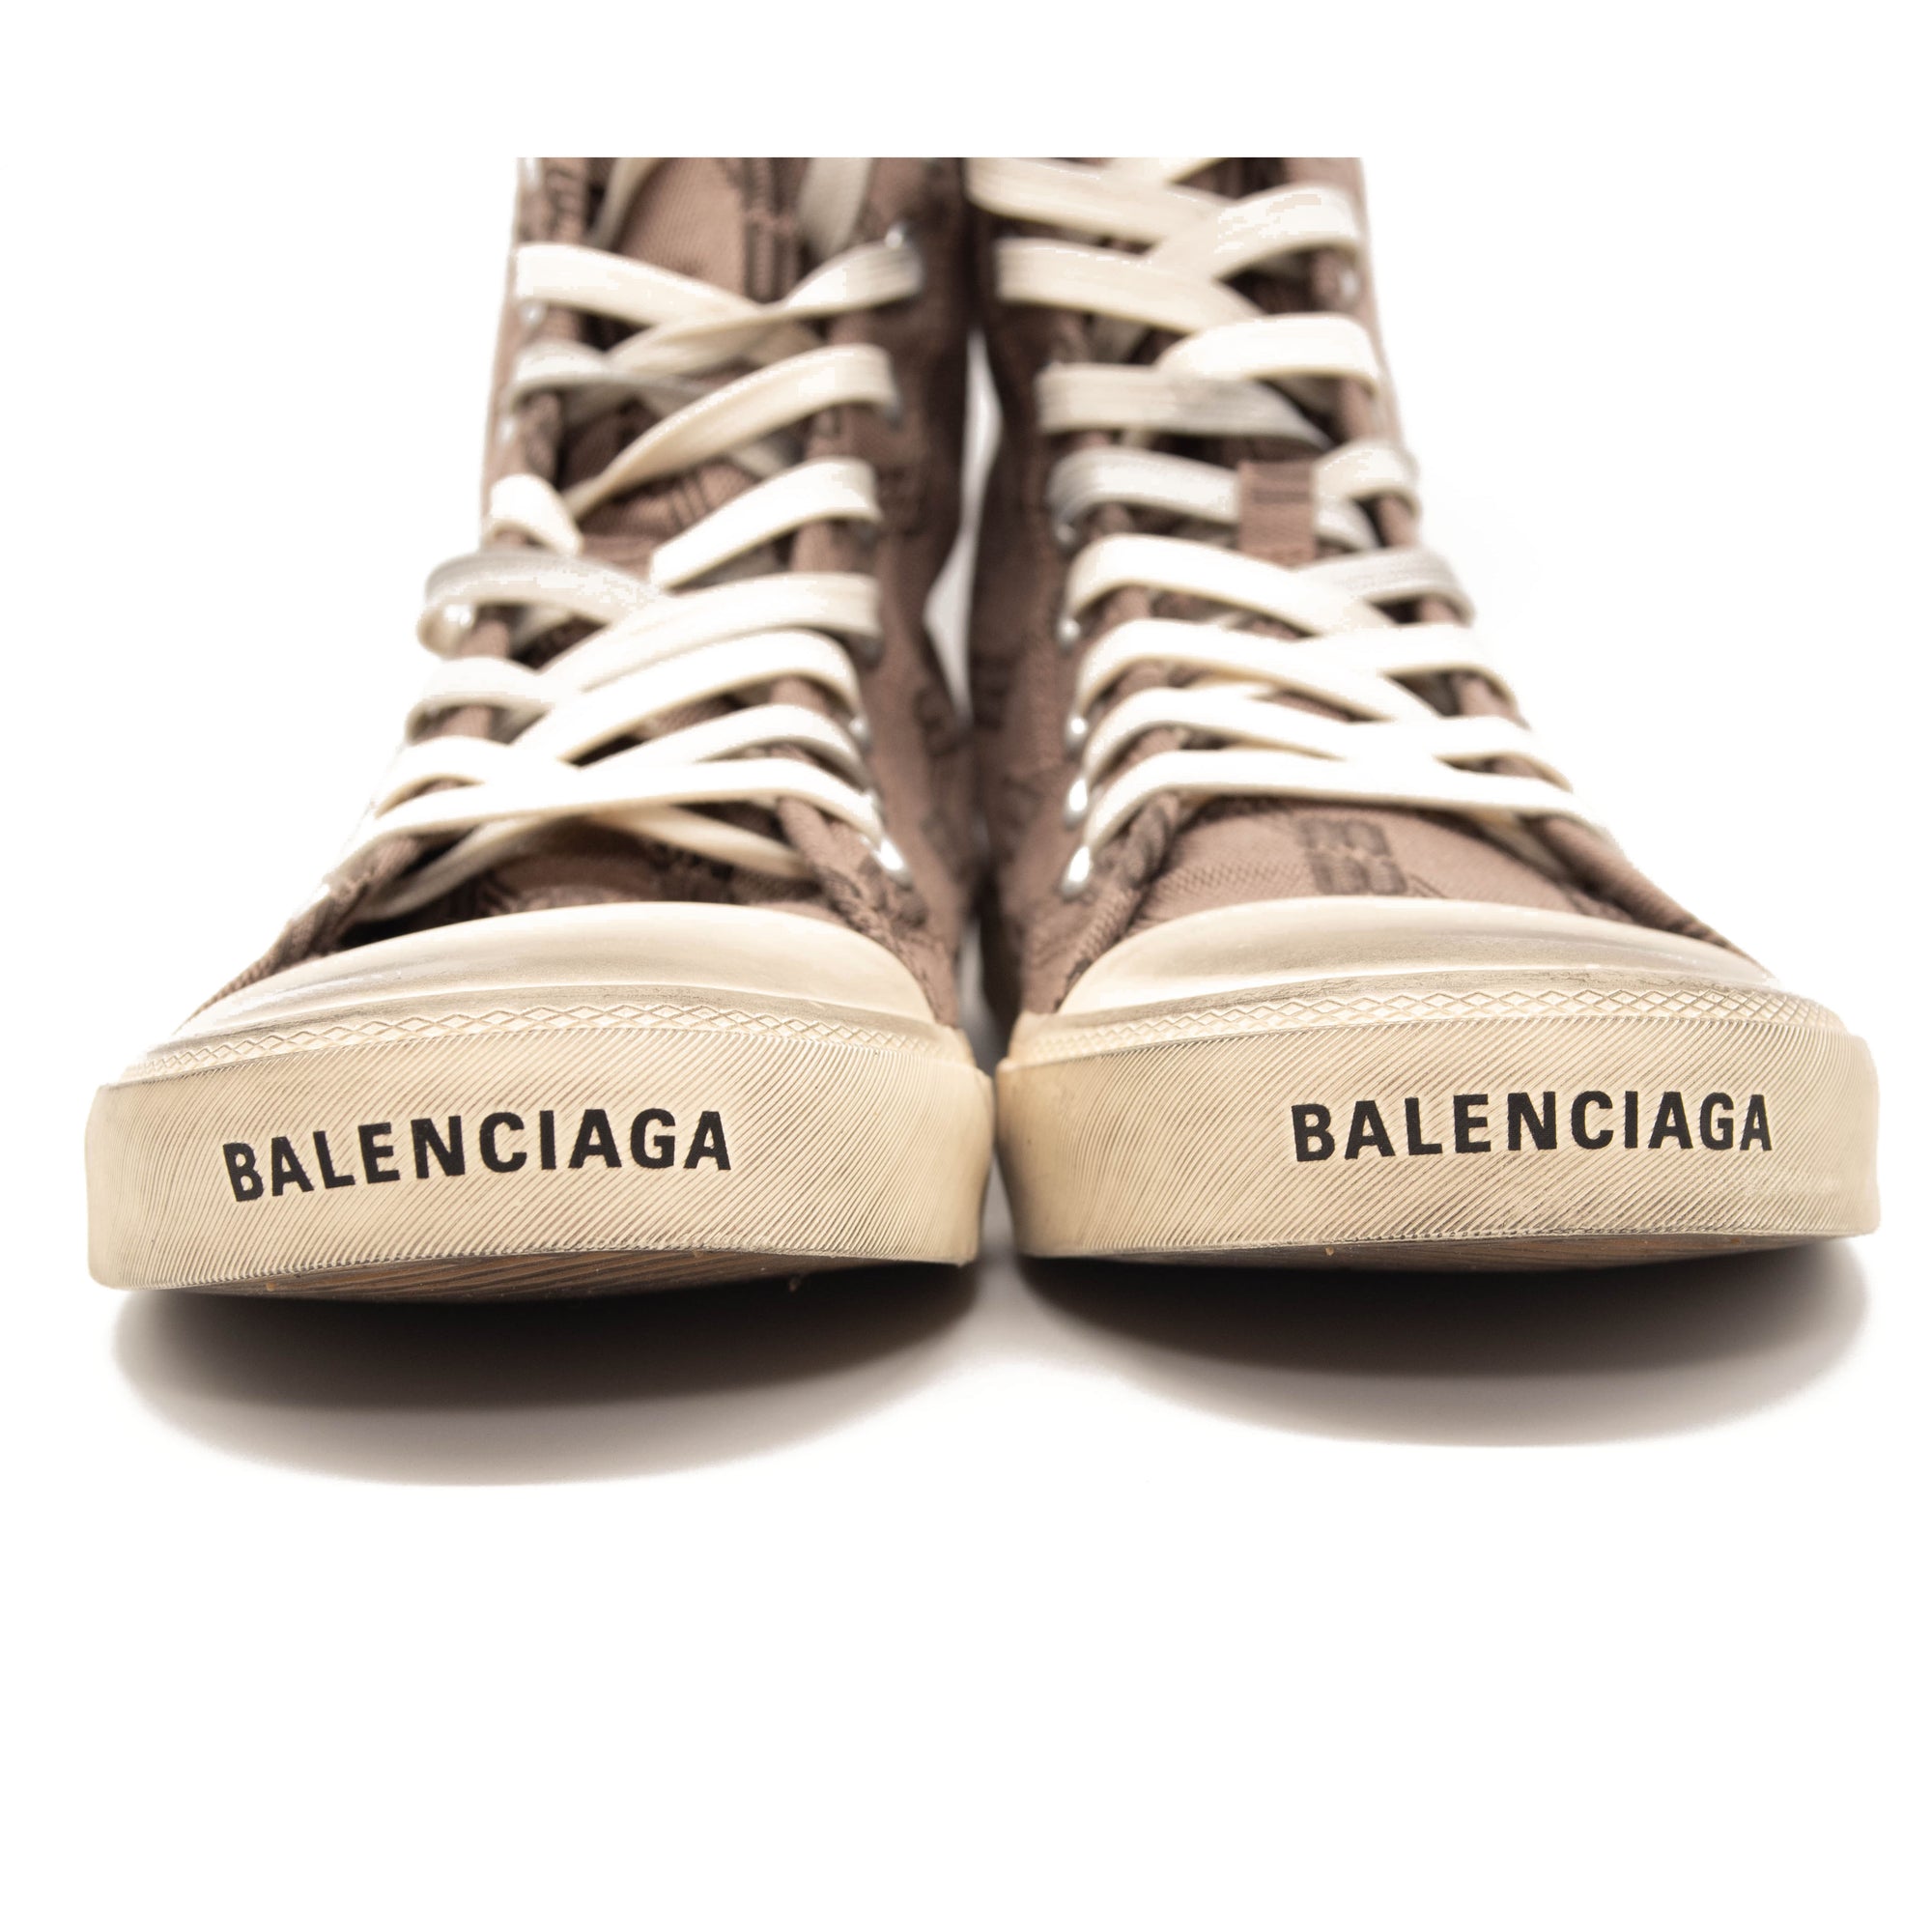 sz 8 US / 38 BALENCIAGA Paris License BB Logo High Top Sneaker Womens Shoes